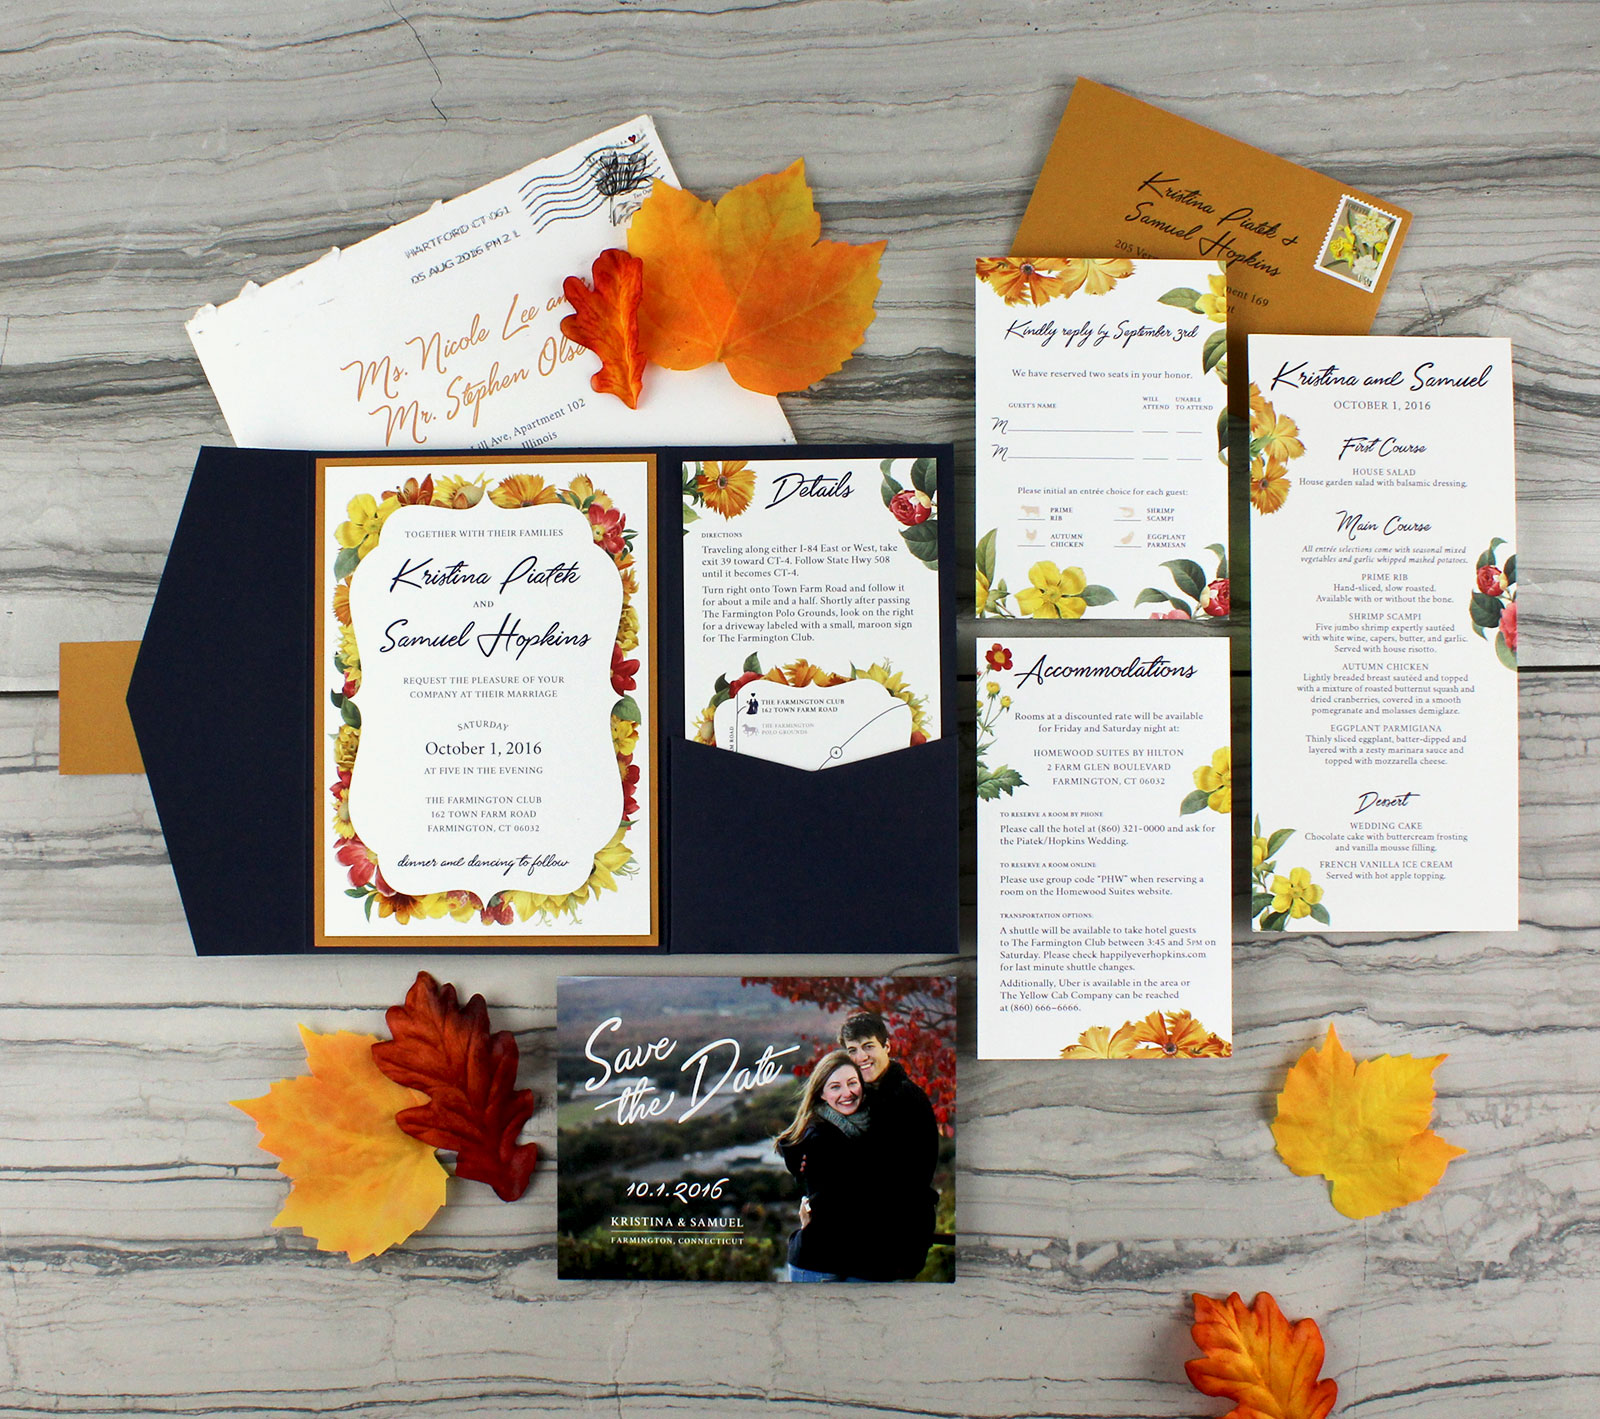 Kristina and Samuel's wedding invitations